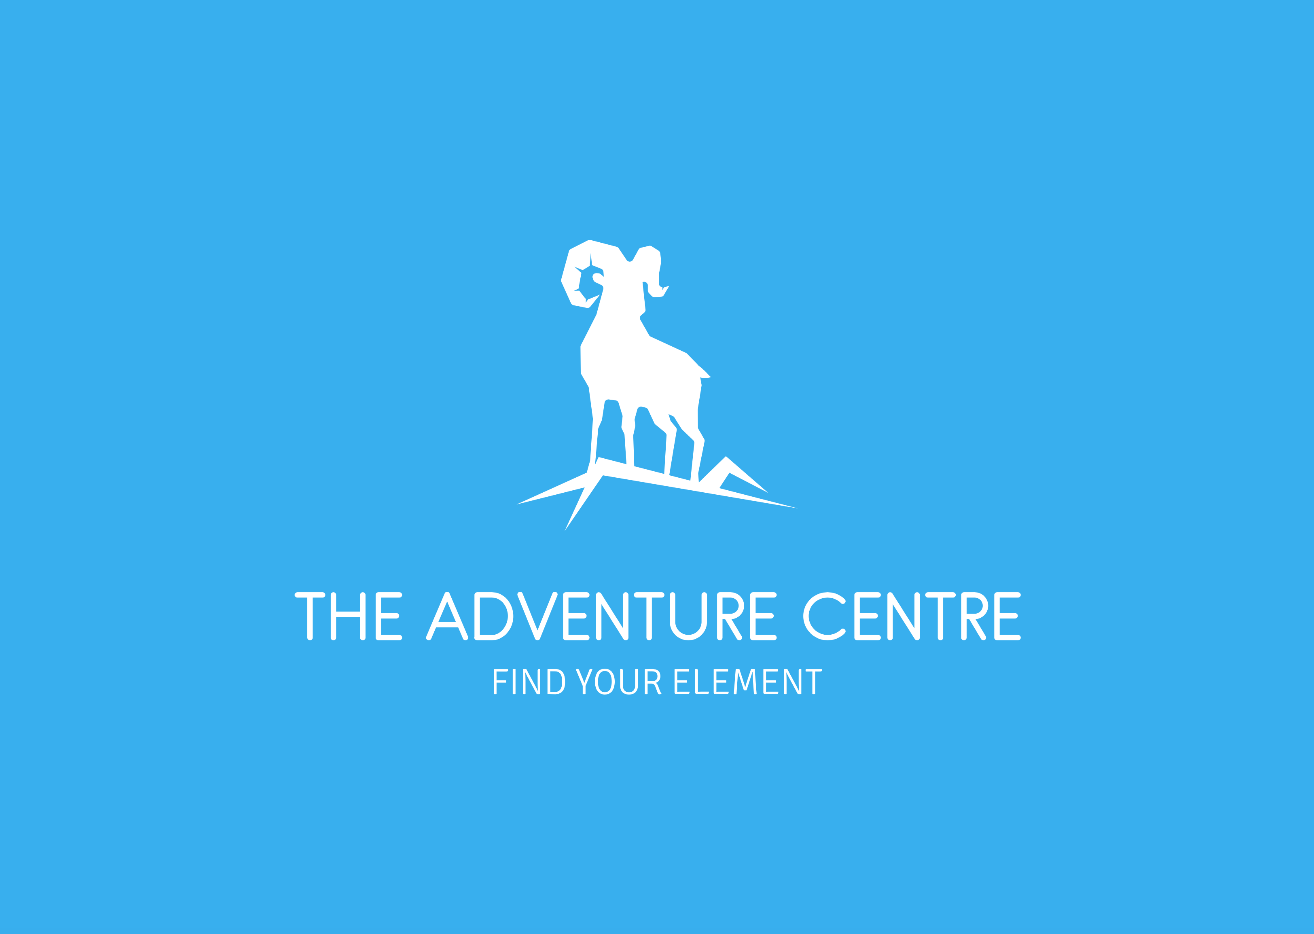 The Adventure Centre